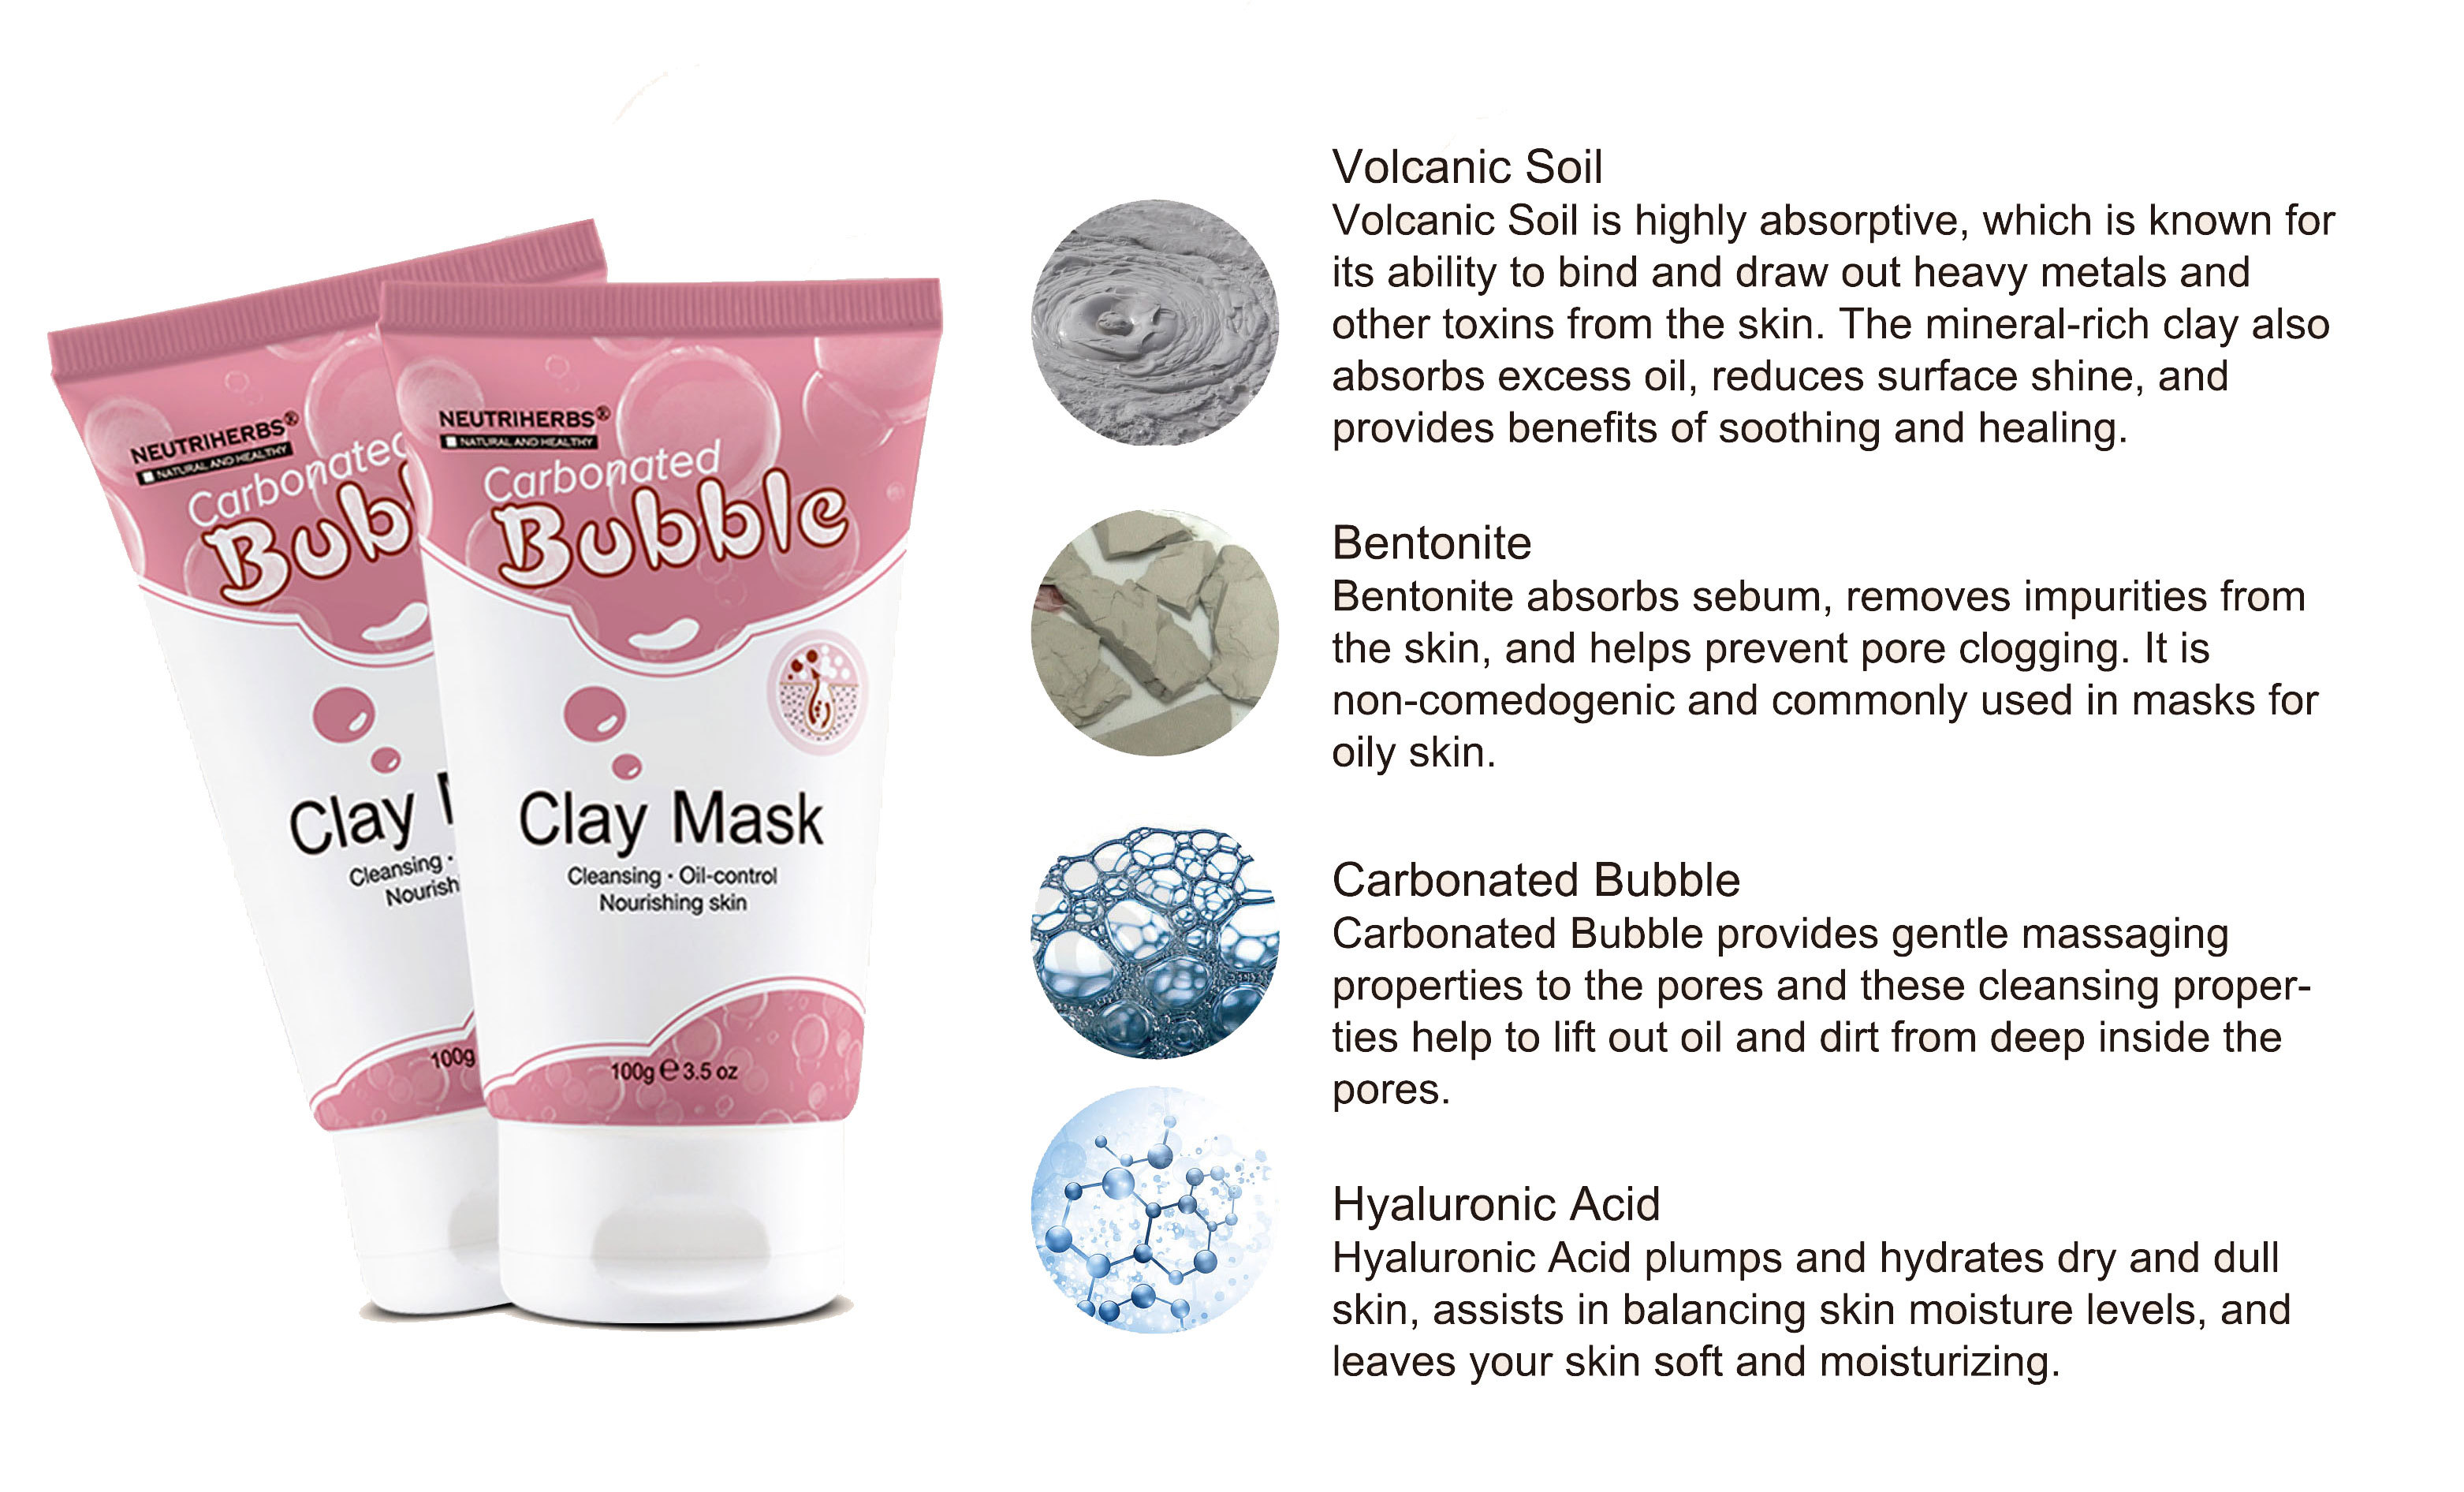 carbonated bubble clay mask-NEUTRIHERBS